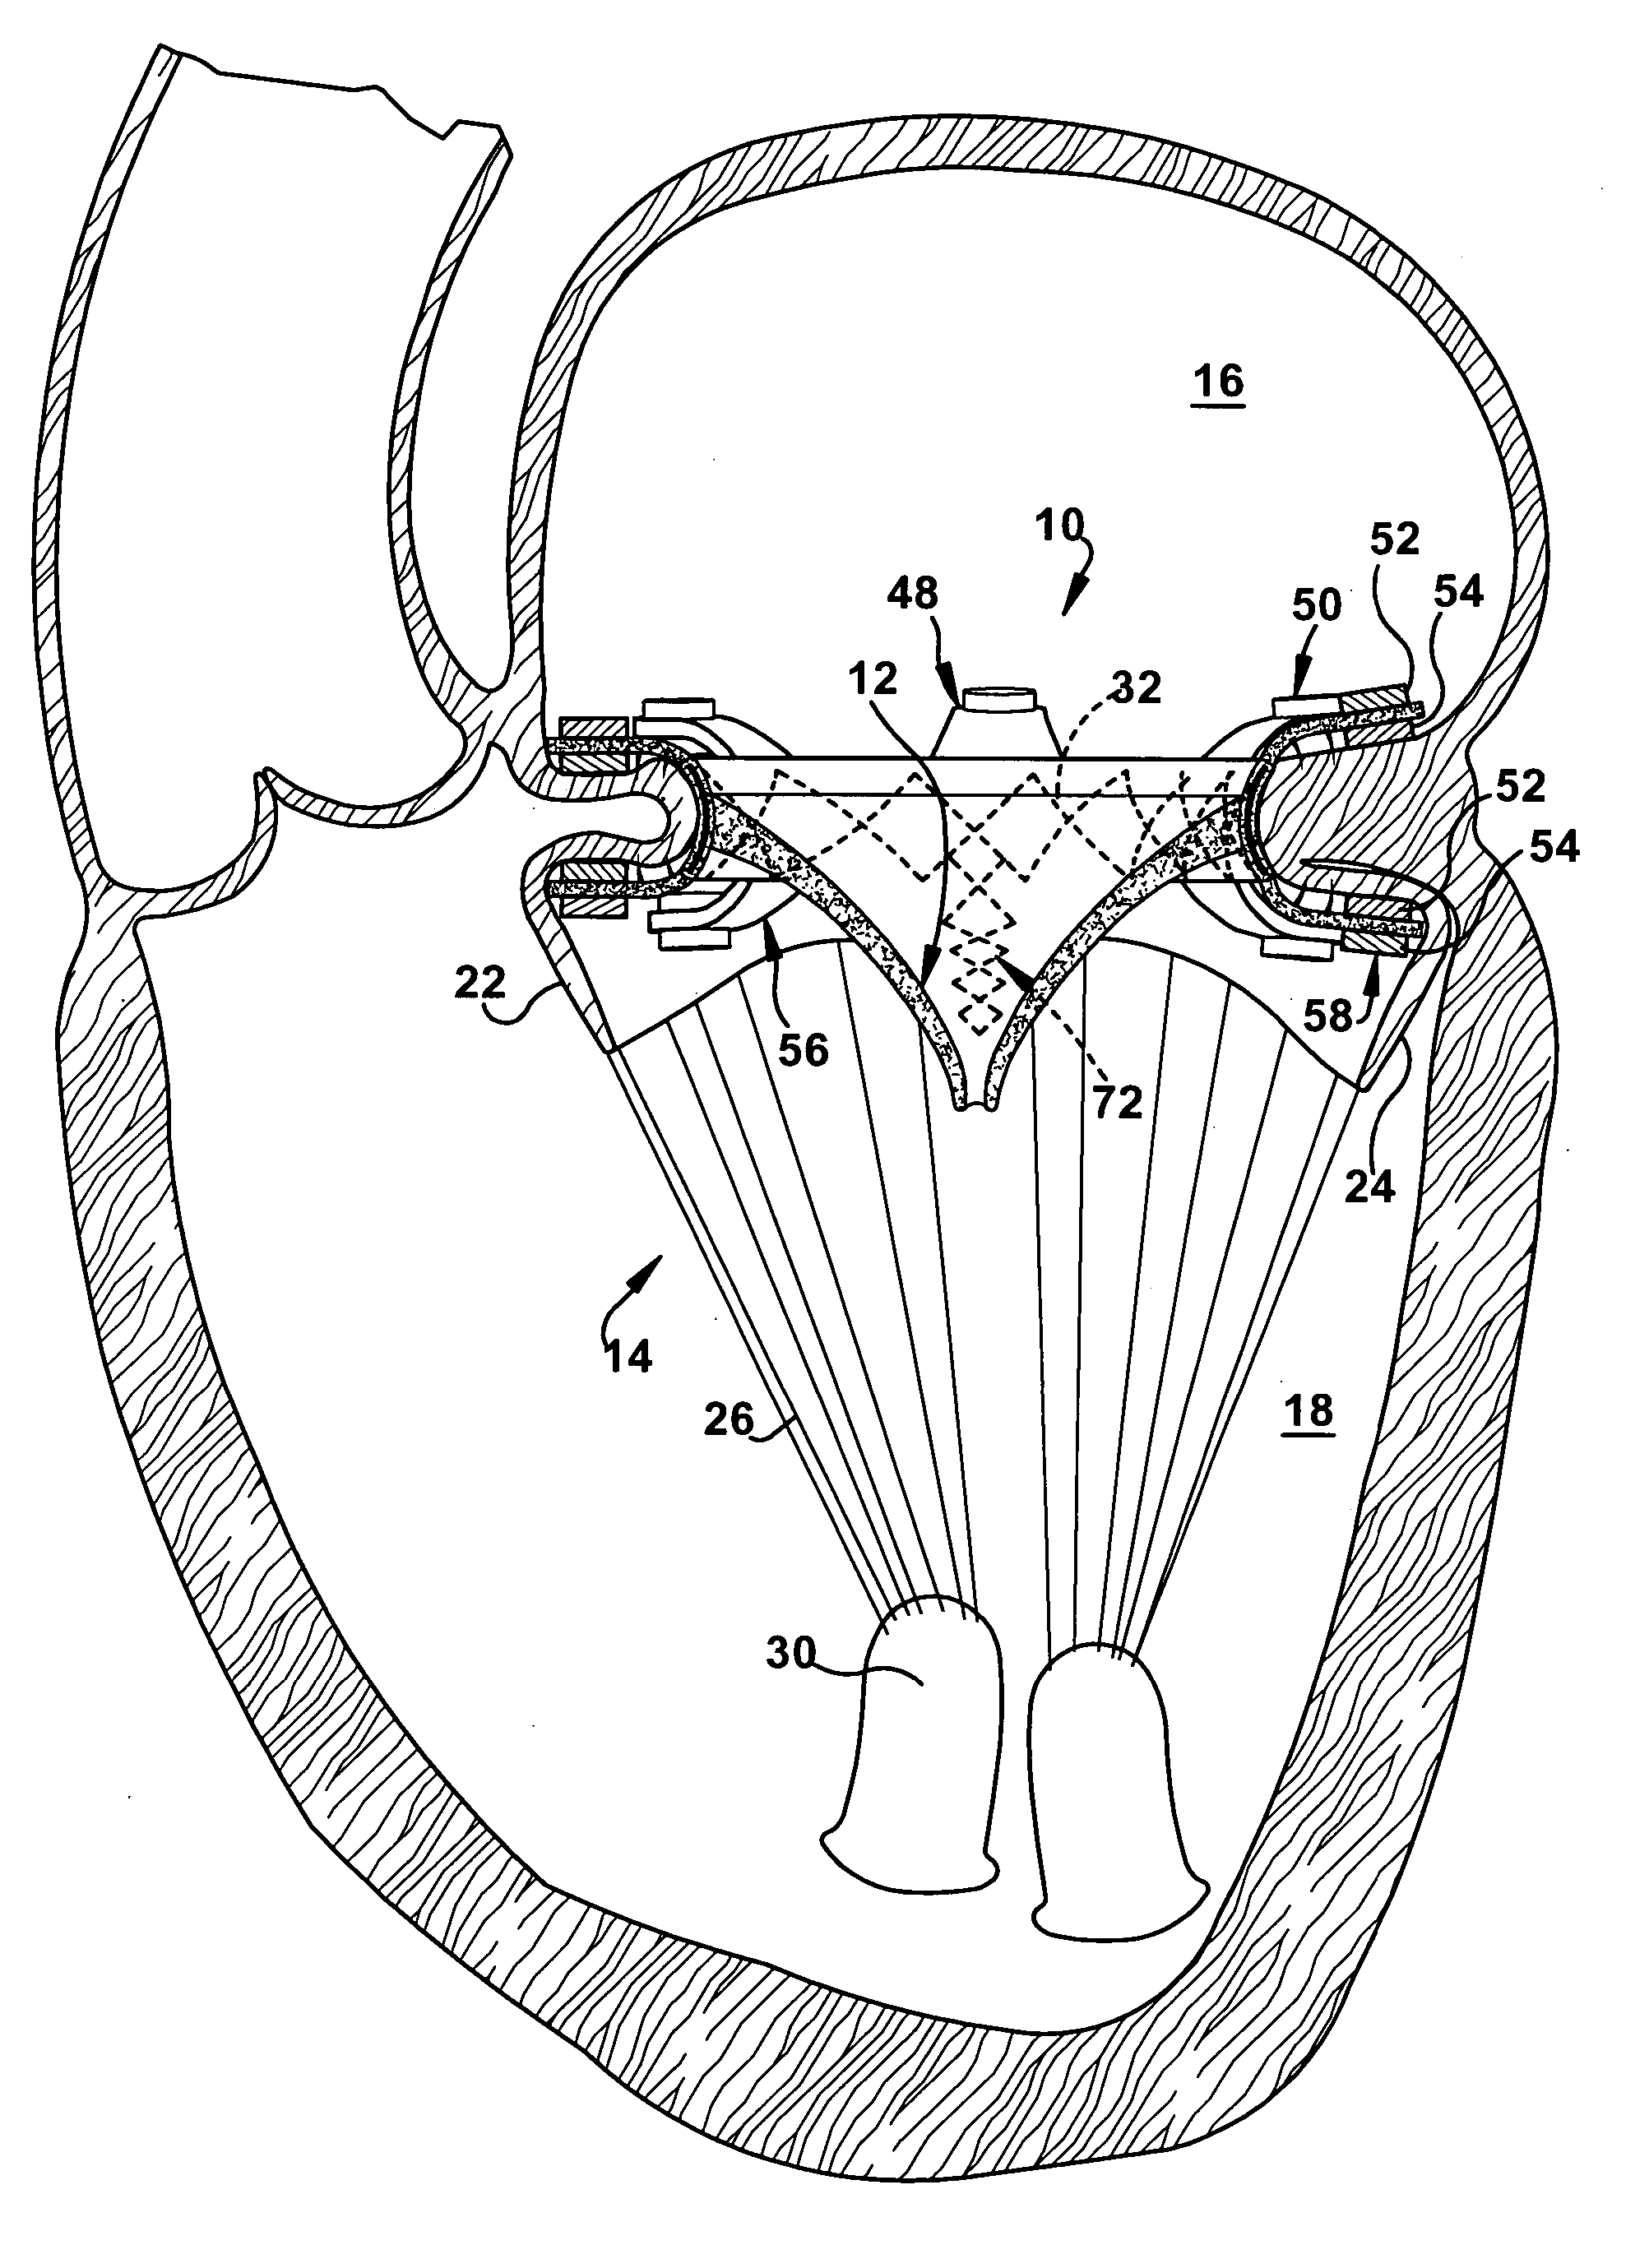 Apparatus and method for replacing a cardiac valve